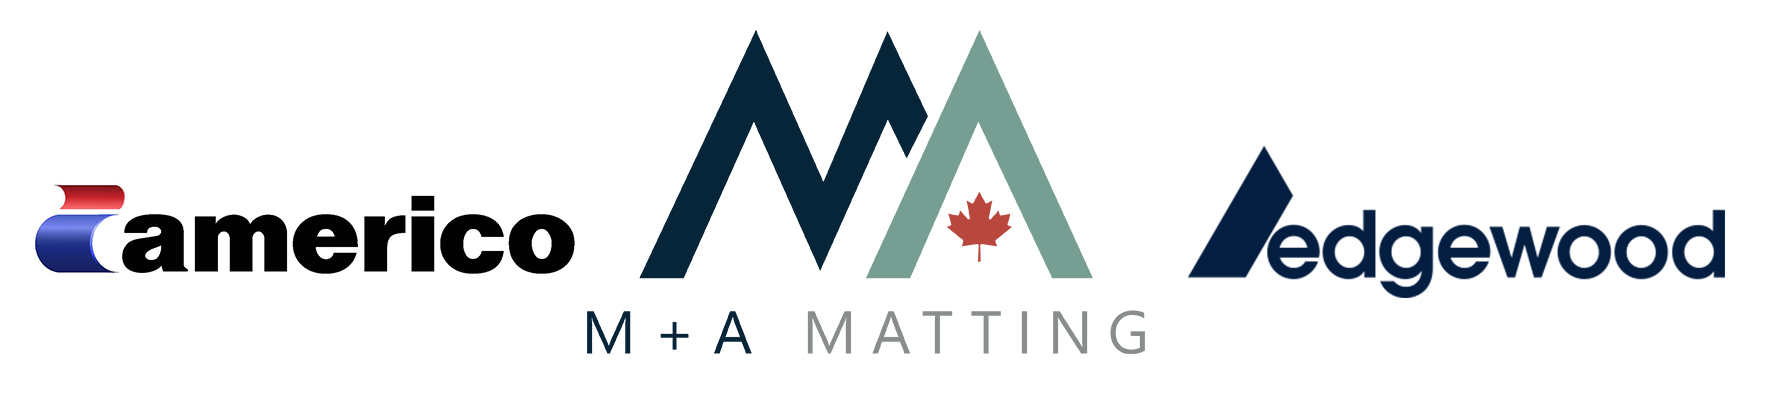 Product Matting Logos